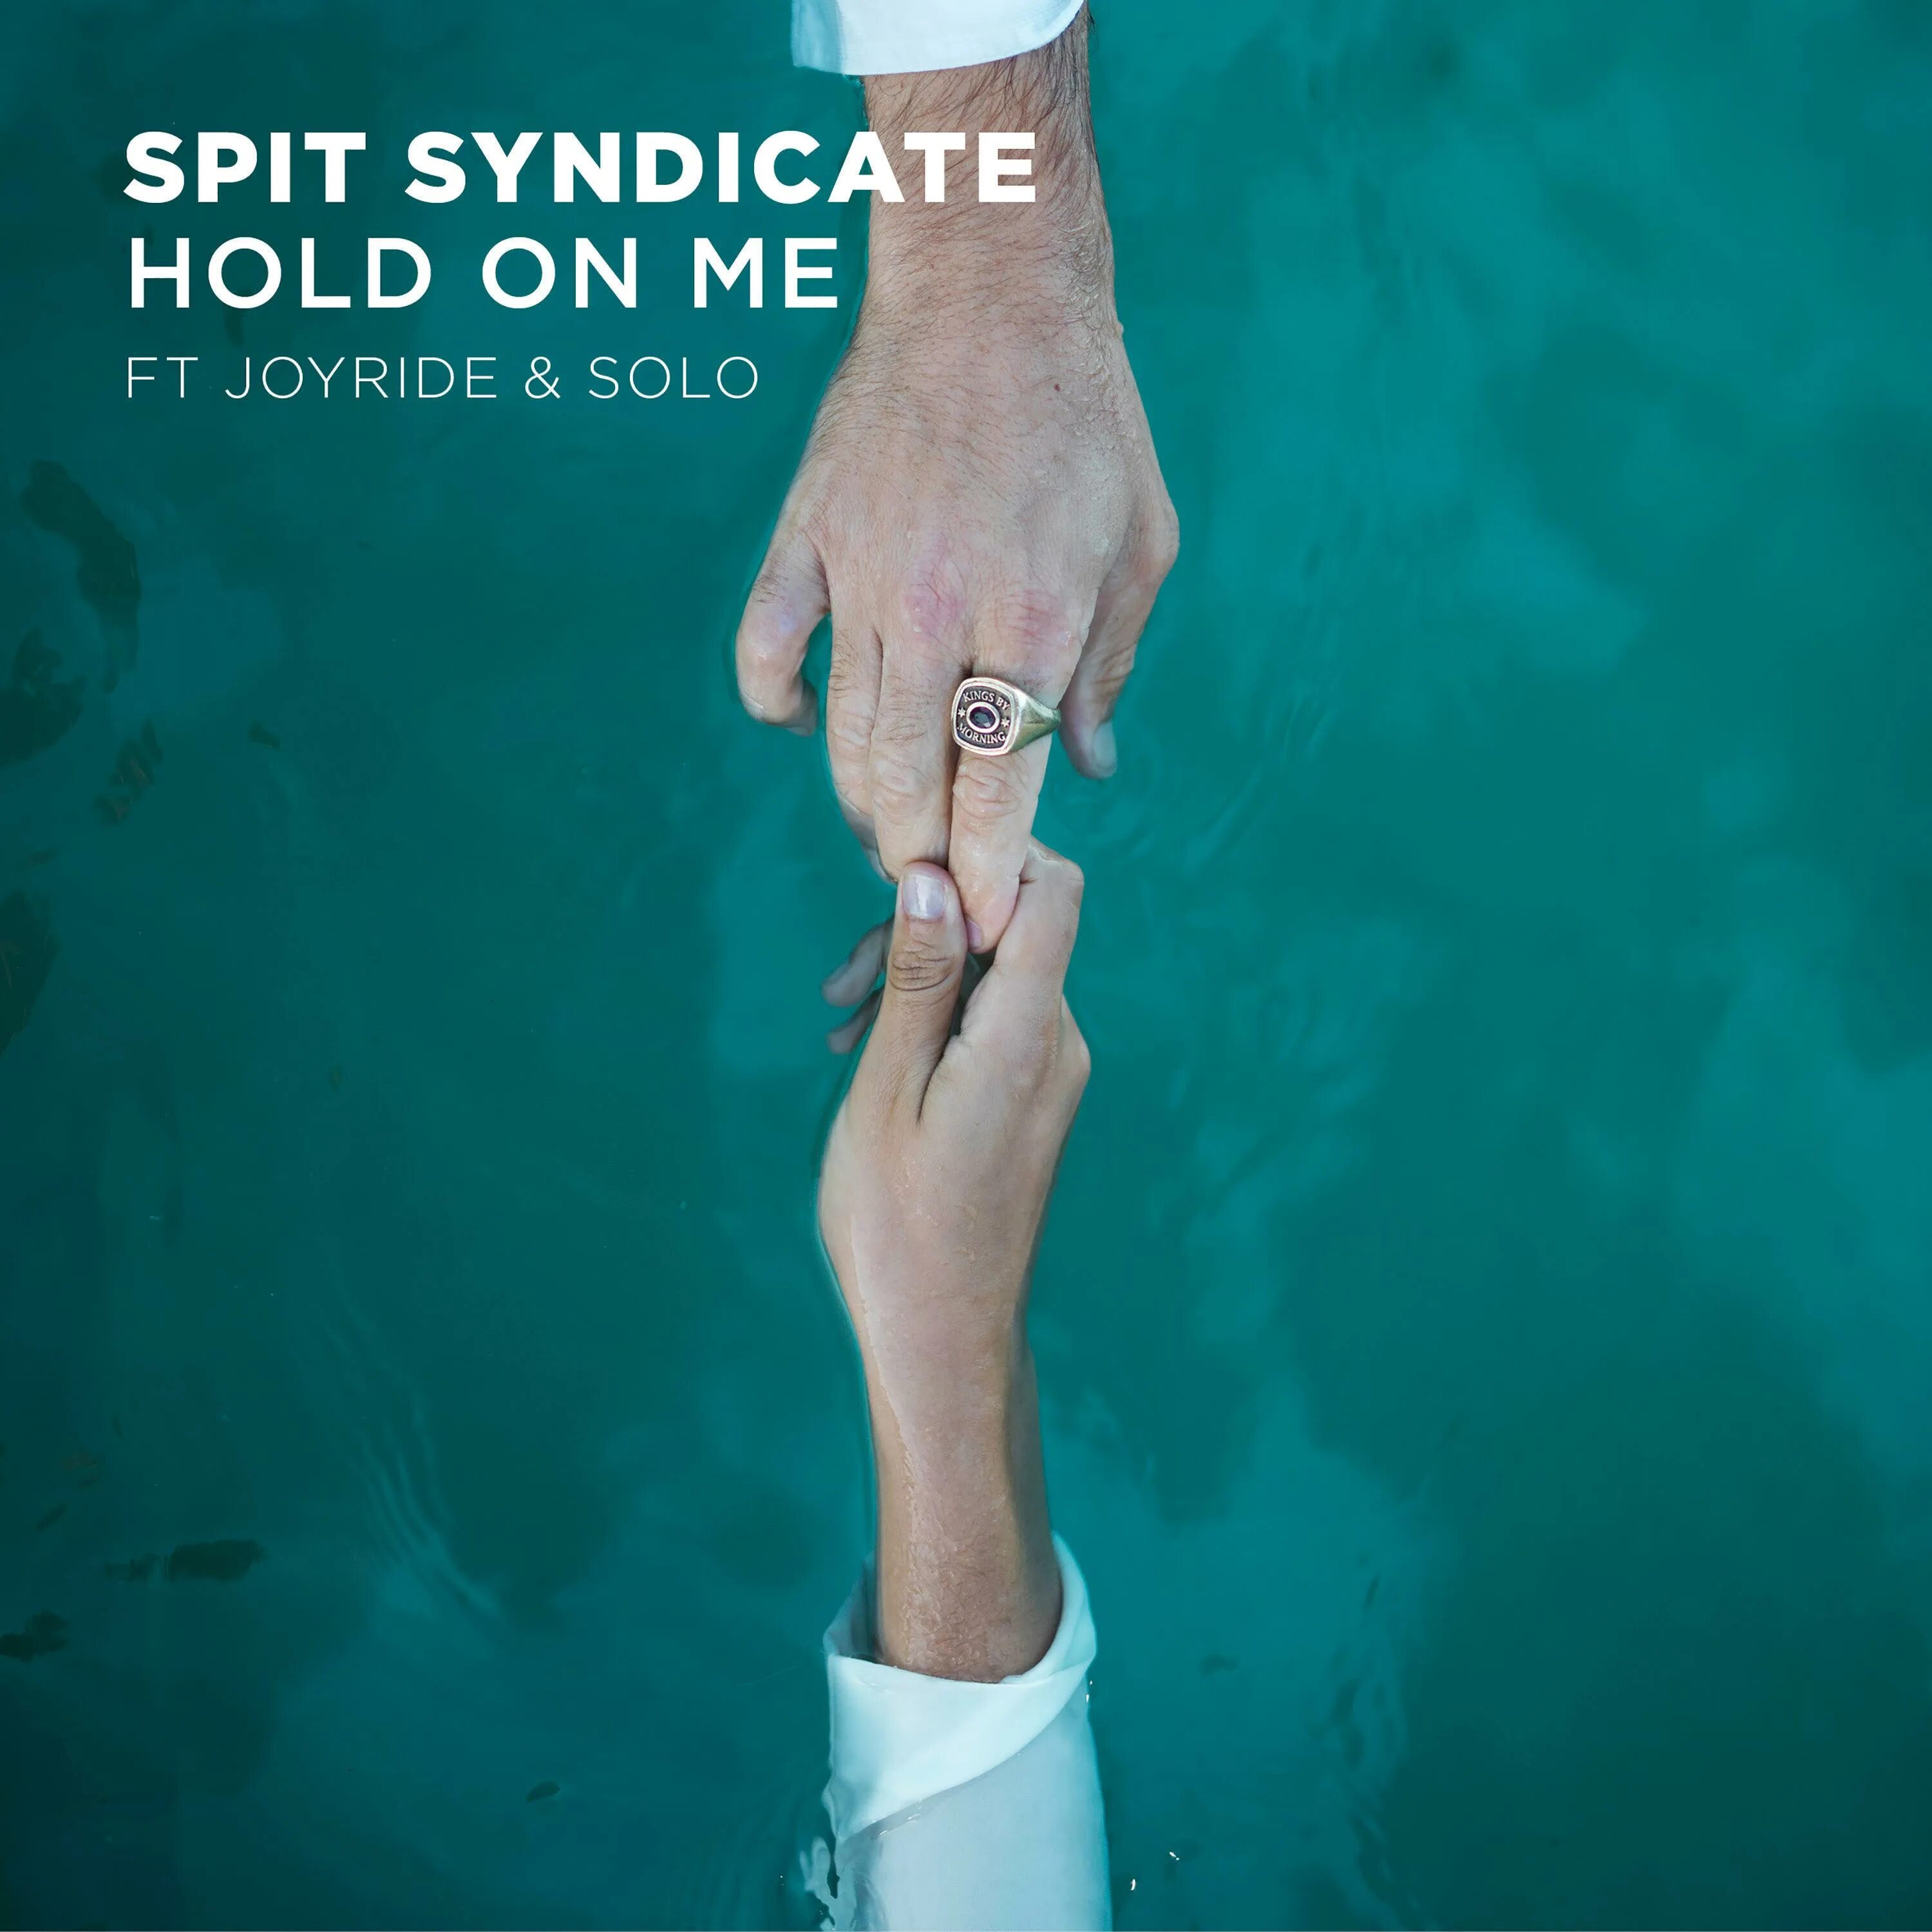 Something hold on me. Hold on me. Hold on to me. Hold on to me перевод. Joyride альбом 2017.